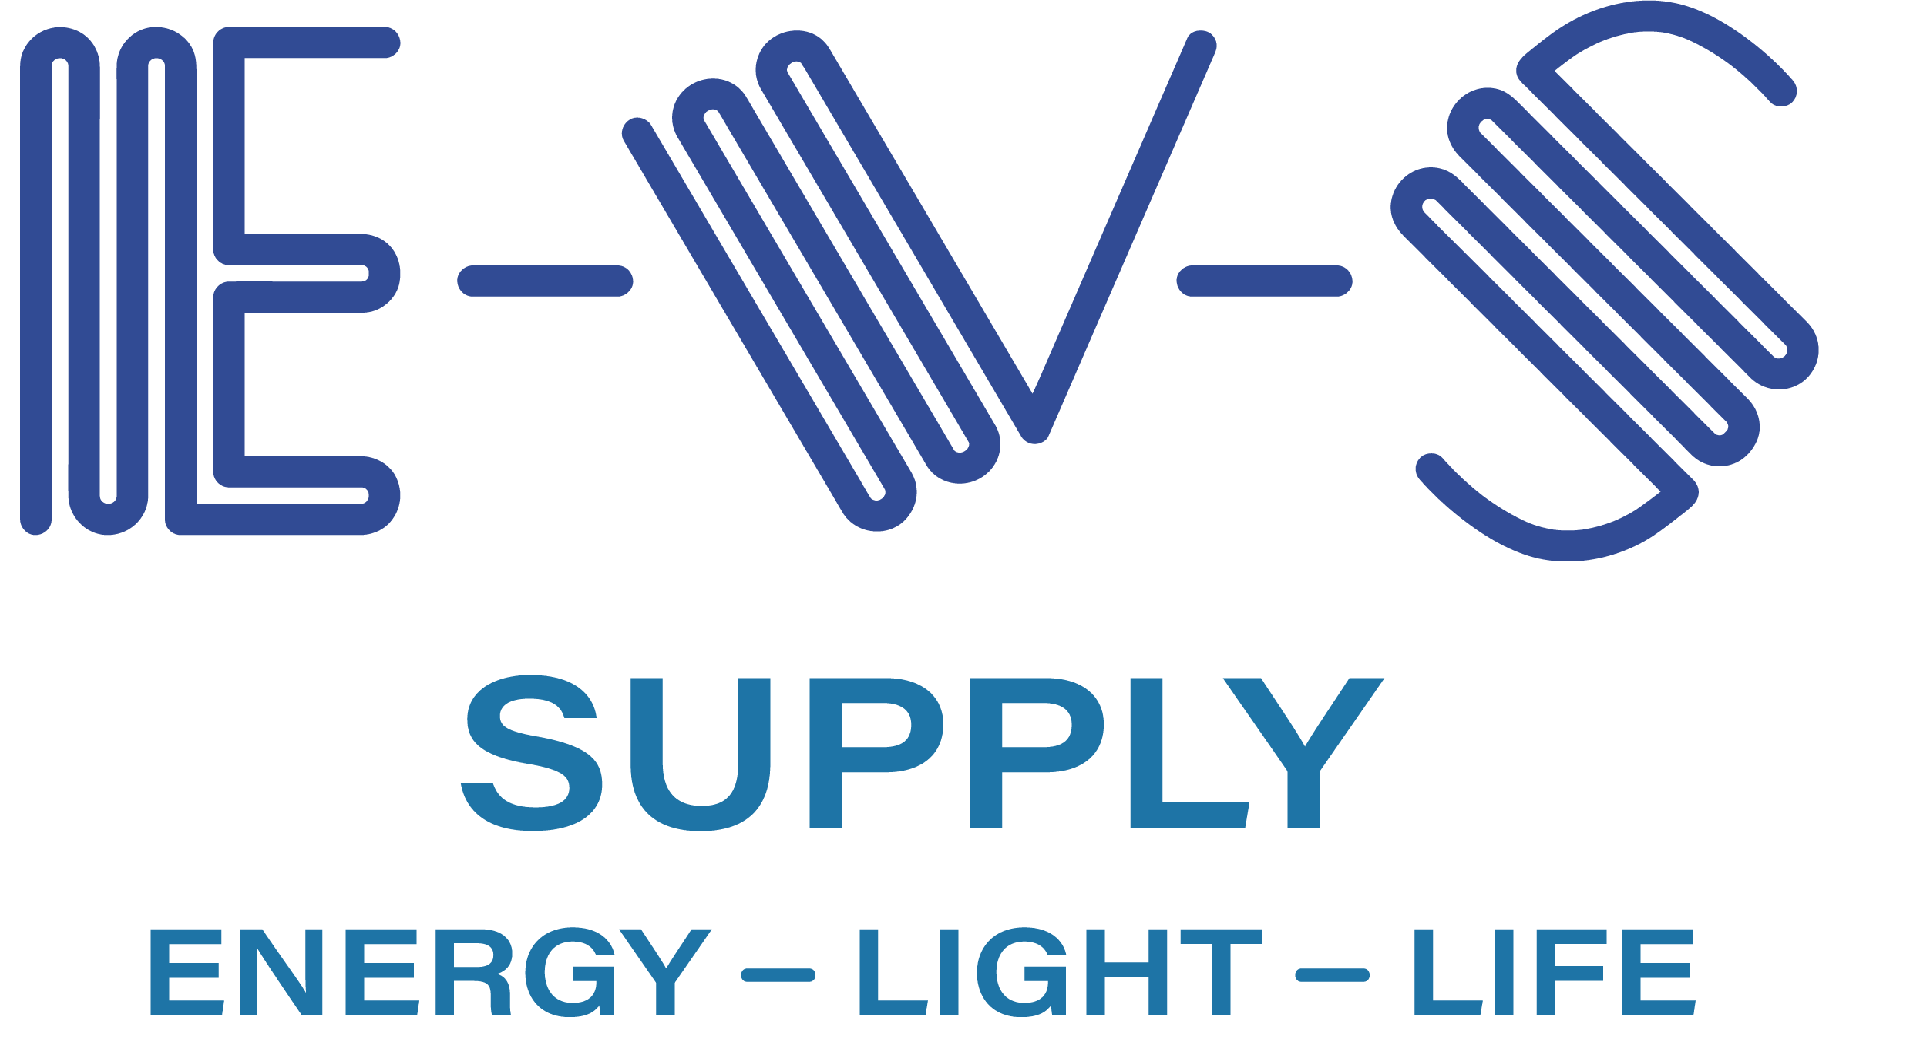 EVS Supply